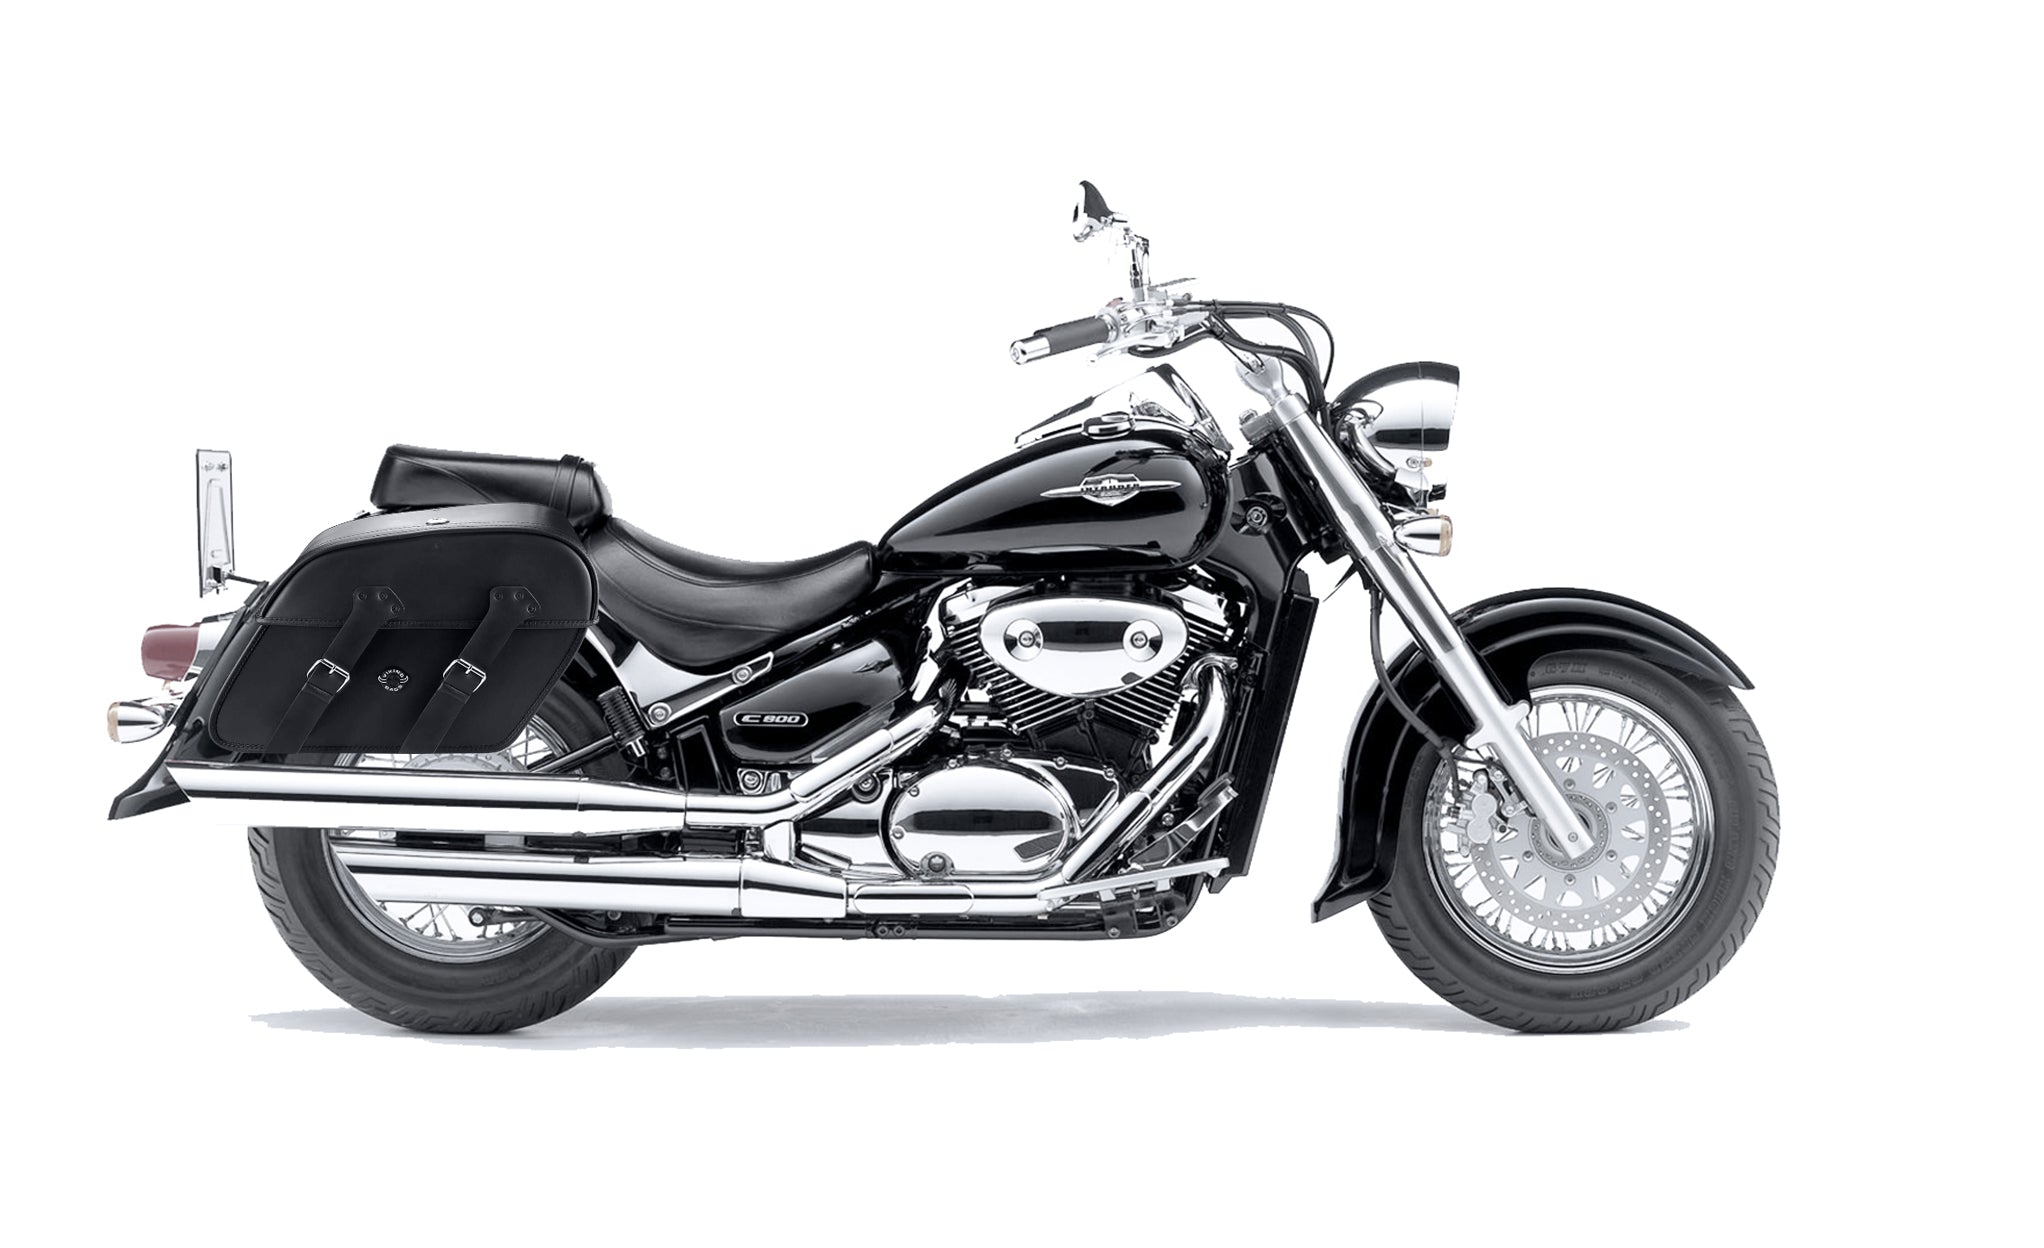 Viking Raven Extra Large Suzuki Volusia 800 Leather Motorcycle Saddlebags on Bike Photo @expand